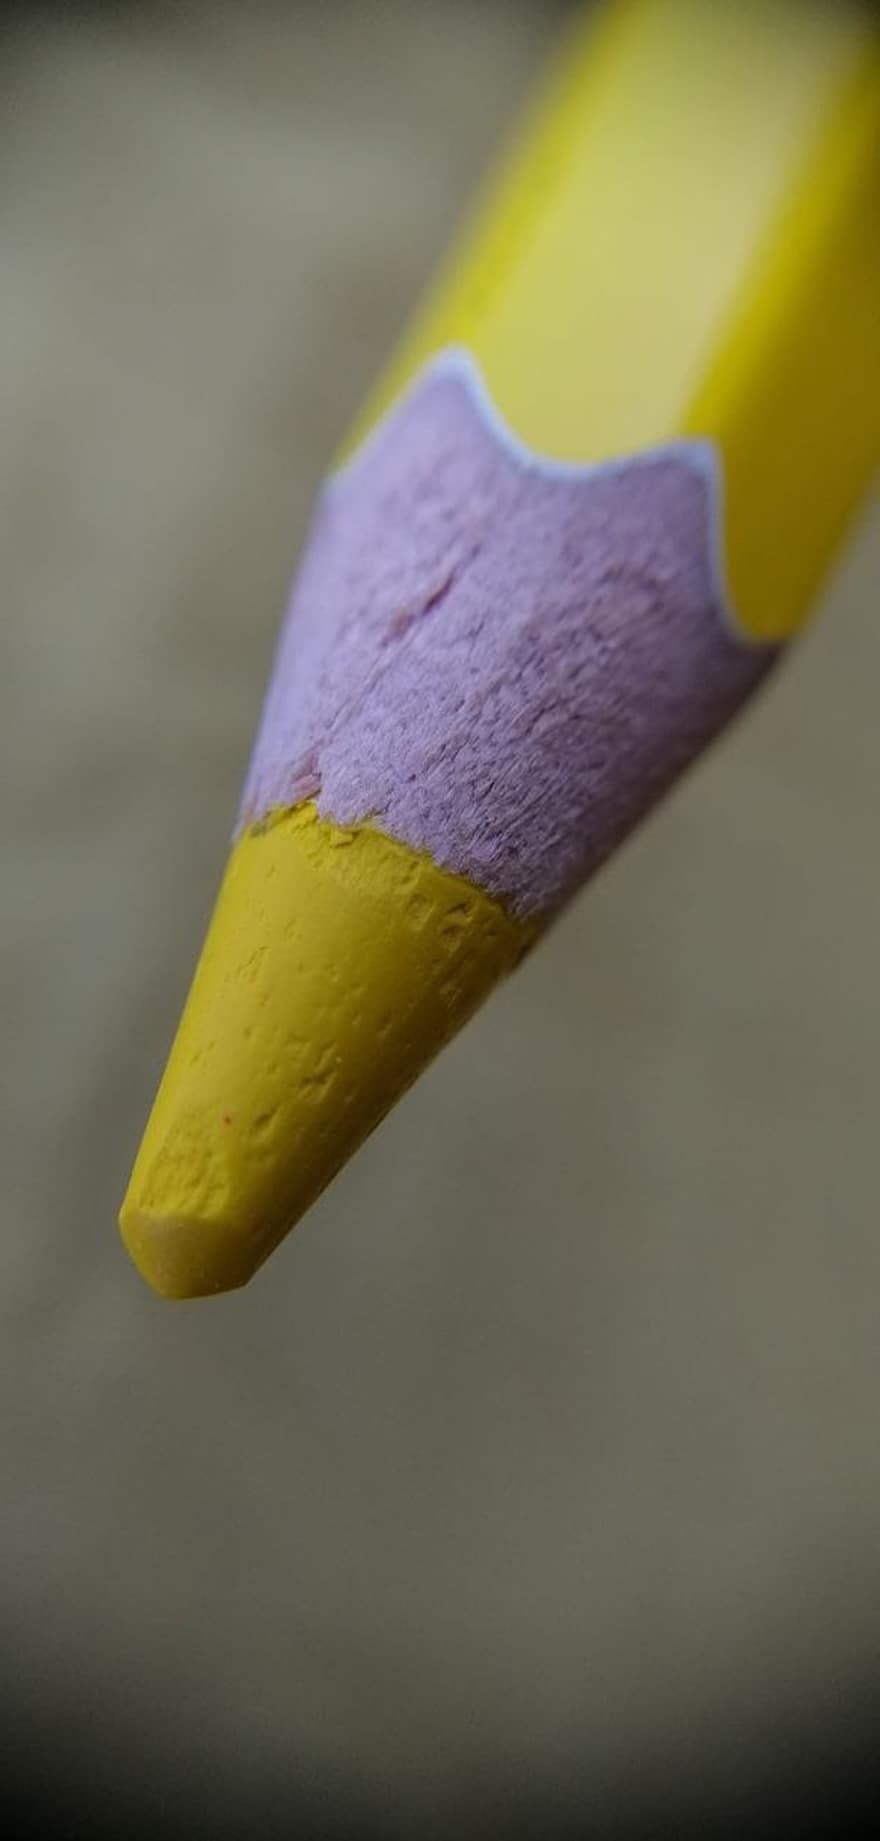 kalem, renk, çekmek, boya, renkli, dolma kalem, Not, çizim, ofis, yazmak, kurs